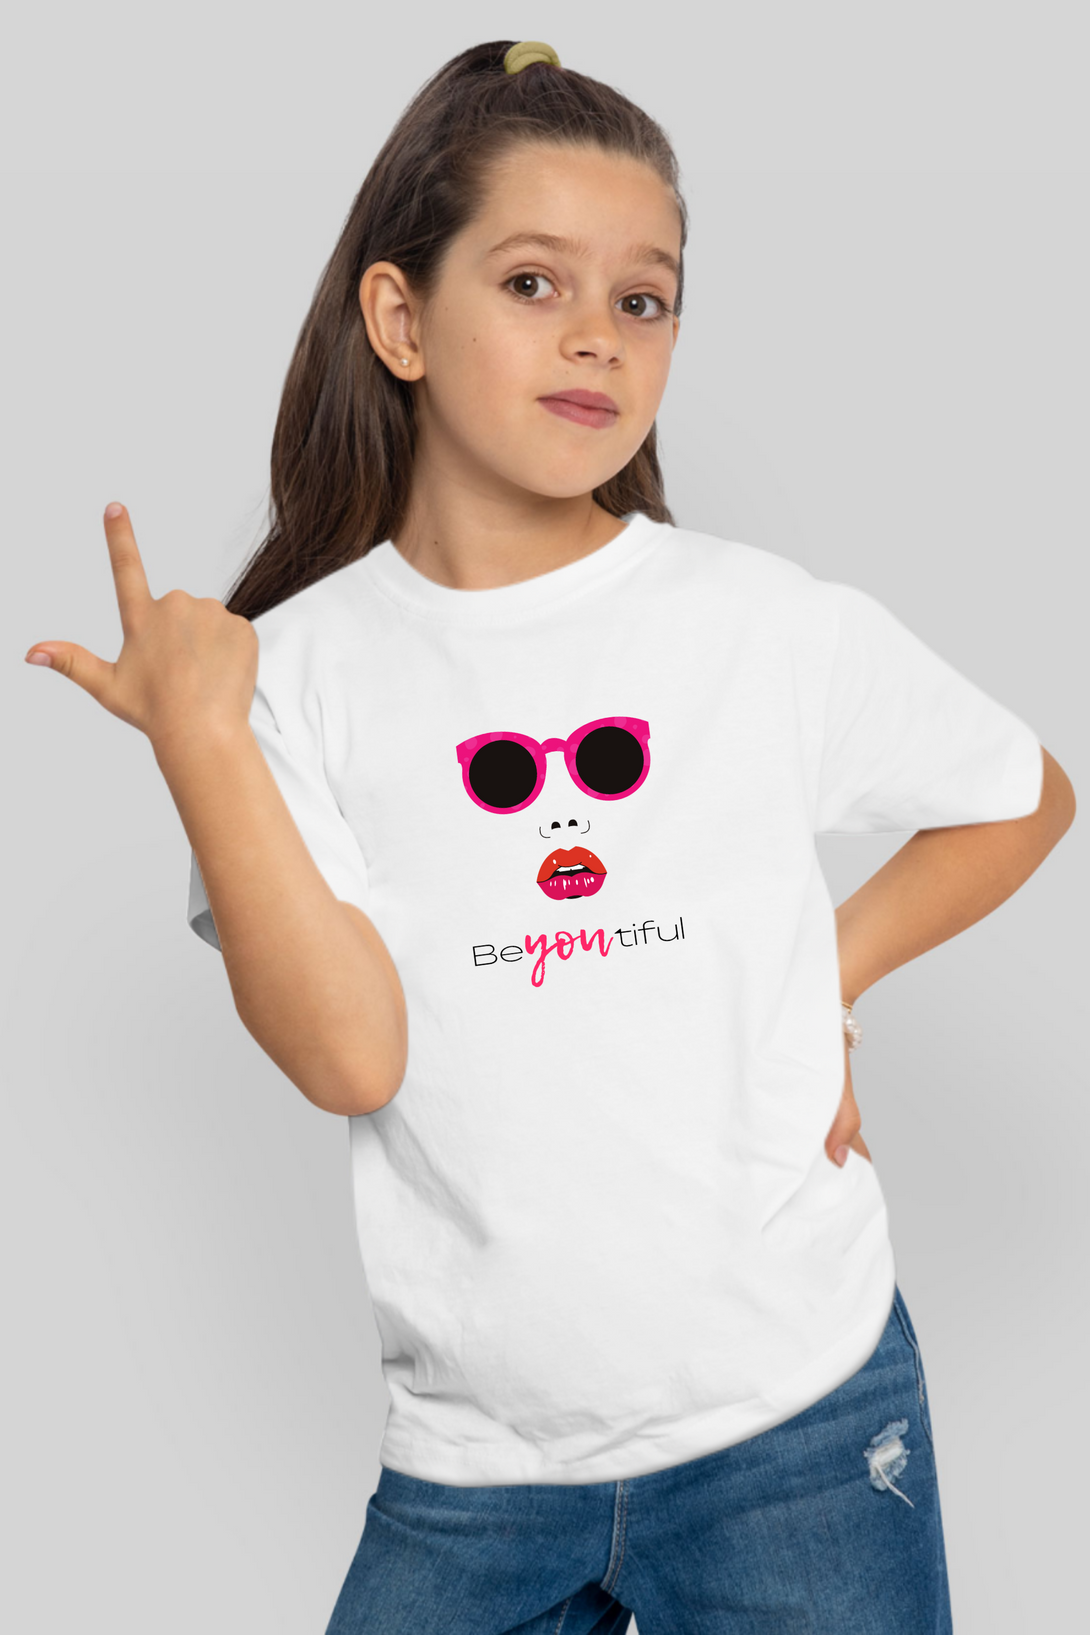 Barbie White Printed T-Shirt For Girl - WowWaves - 4